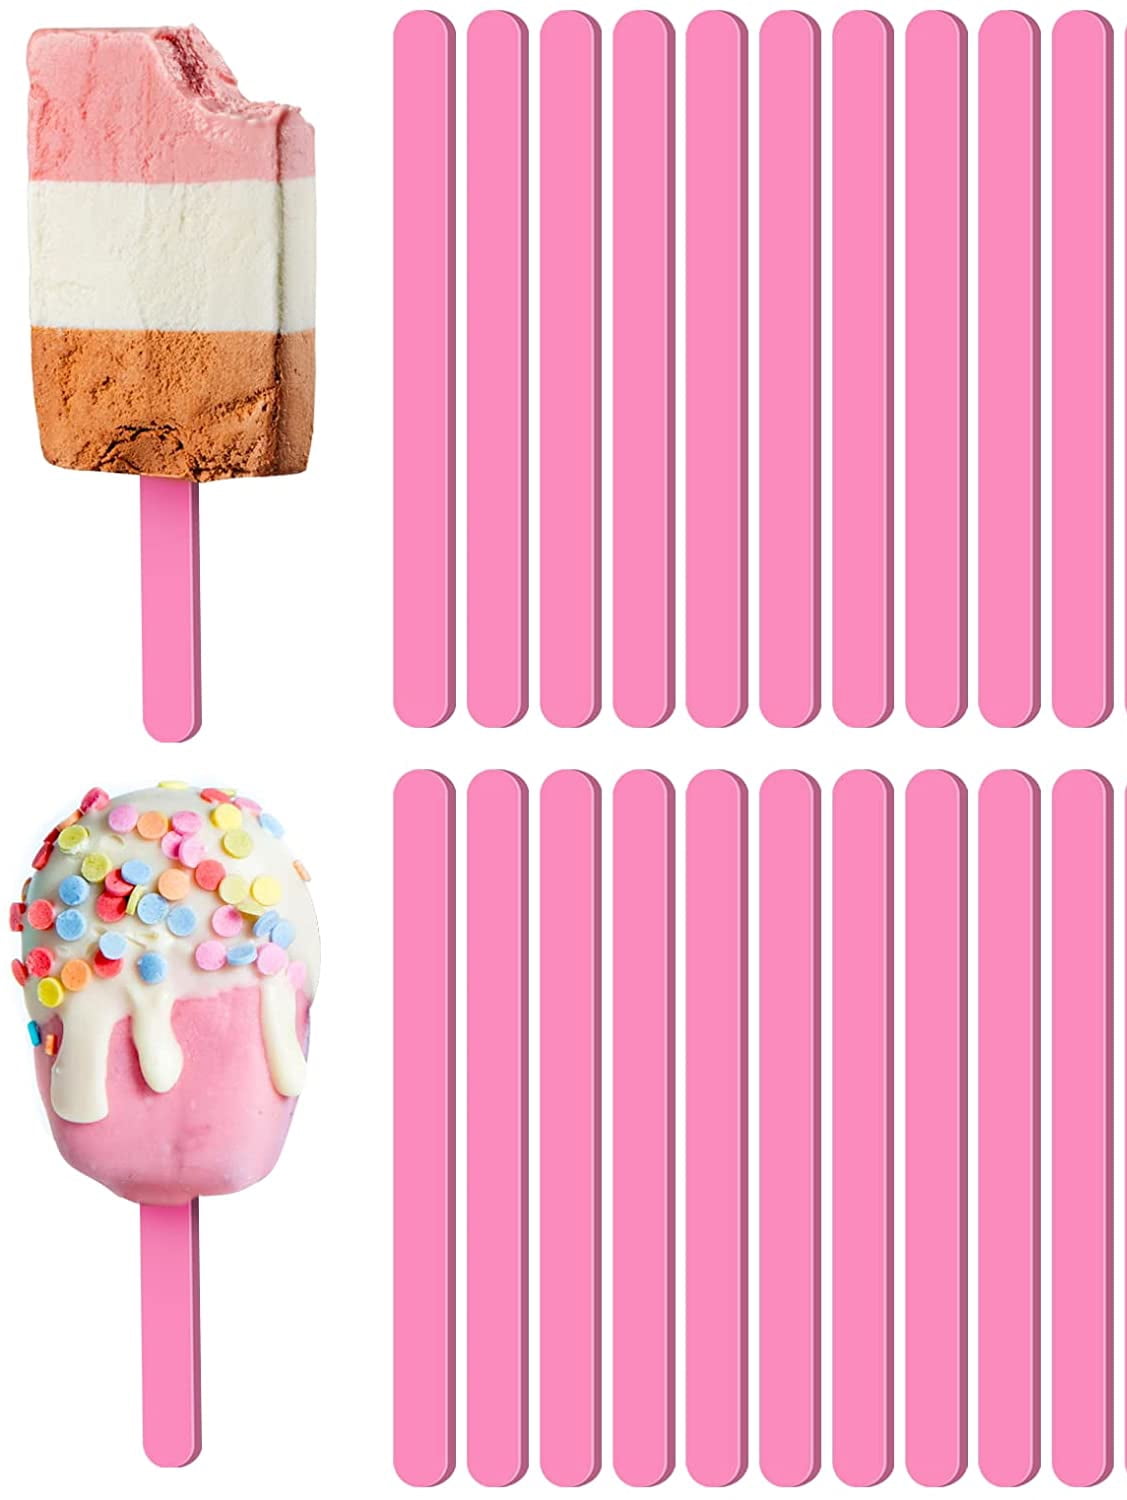 Mini Popsicle Sticks – The Yummy Life Bake Shop, LLC